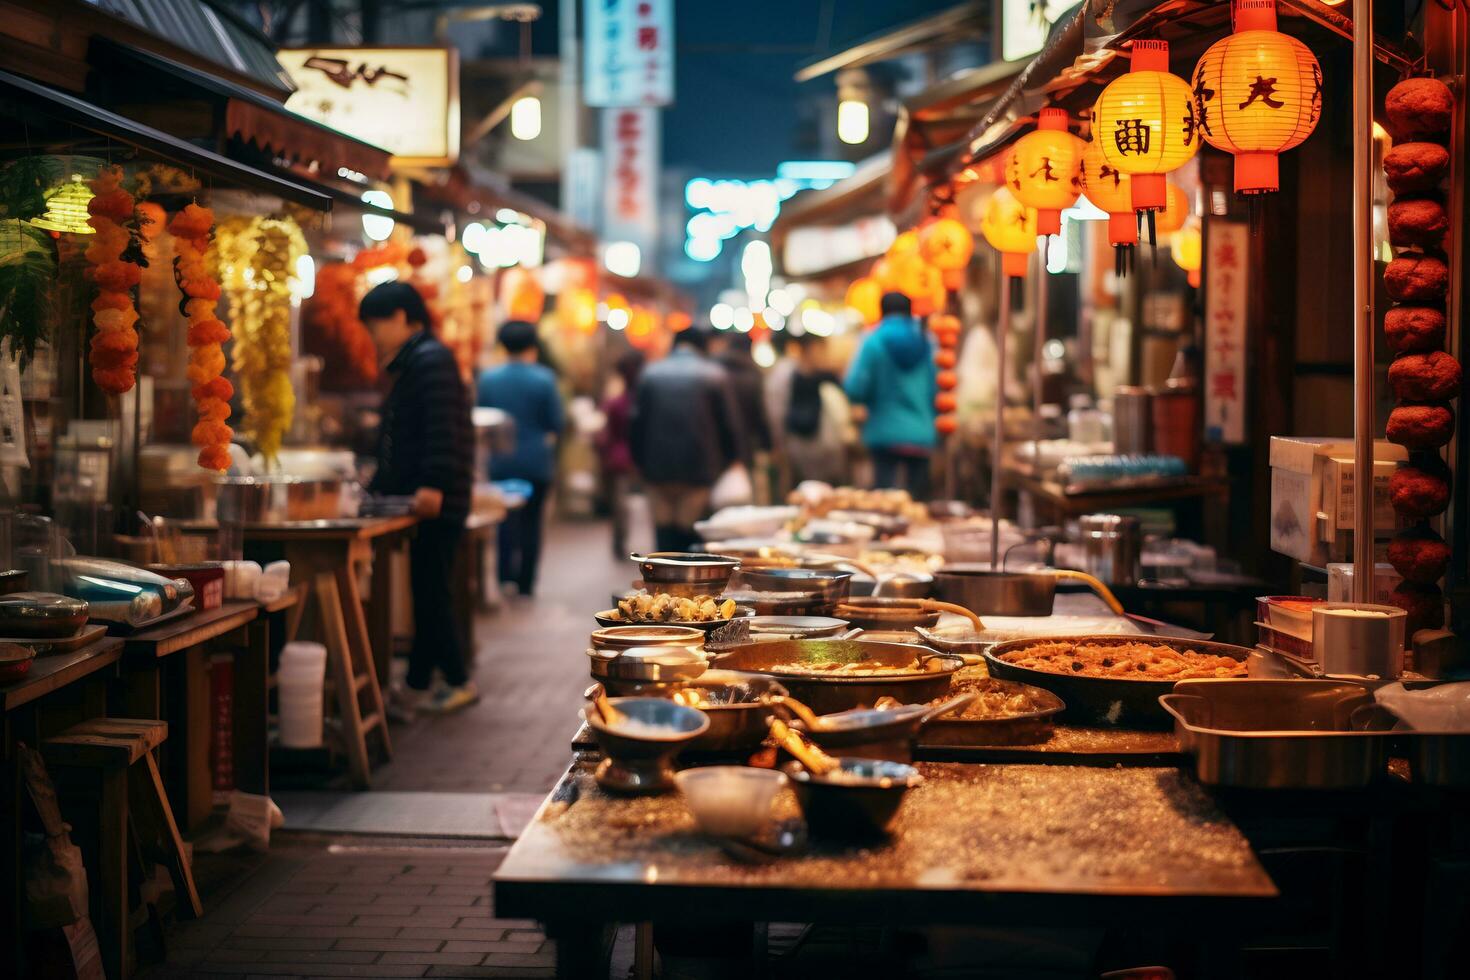 ai generativo imagen de un bullicioso japonés calle comida mercado foto